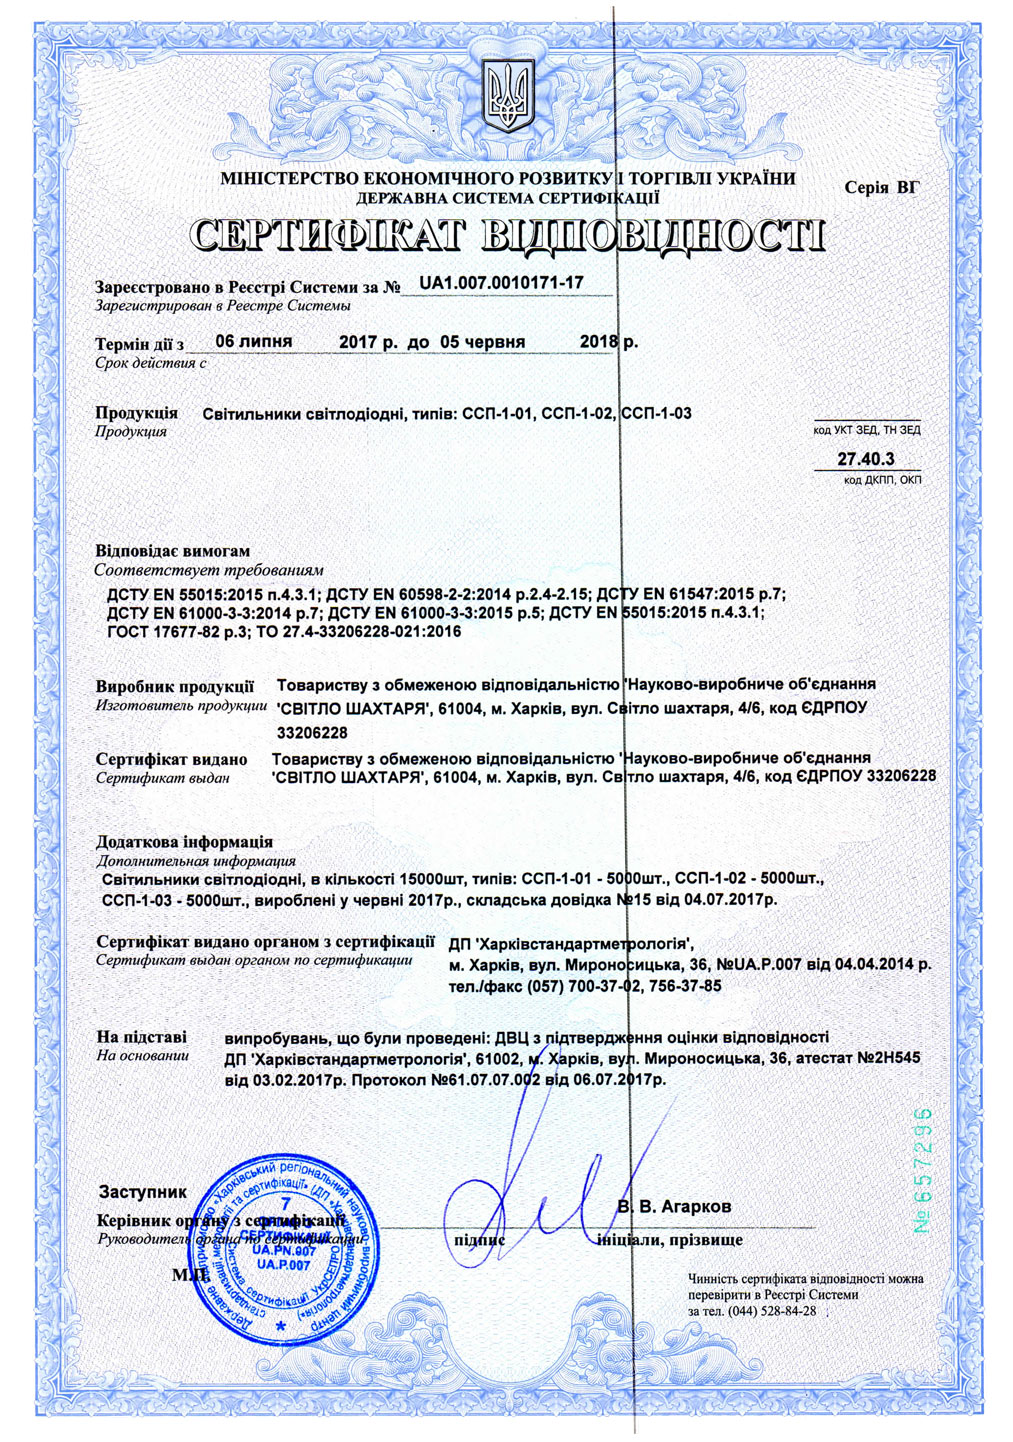 Certificate of LED luminaires SSP-1-01, SSP-1-02, SSP-1-03